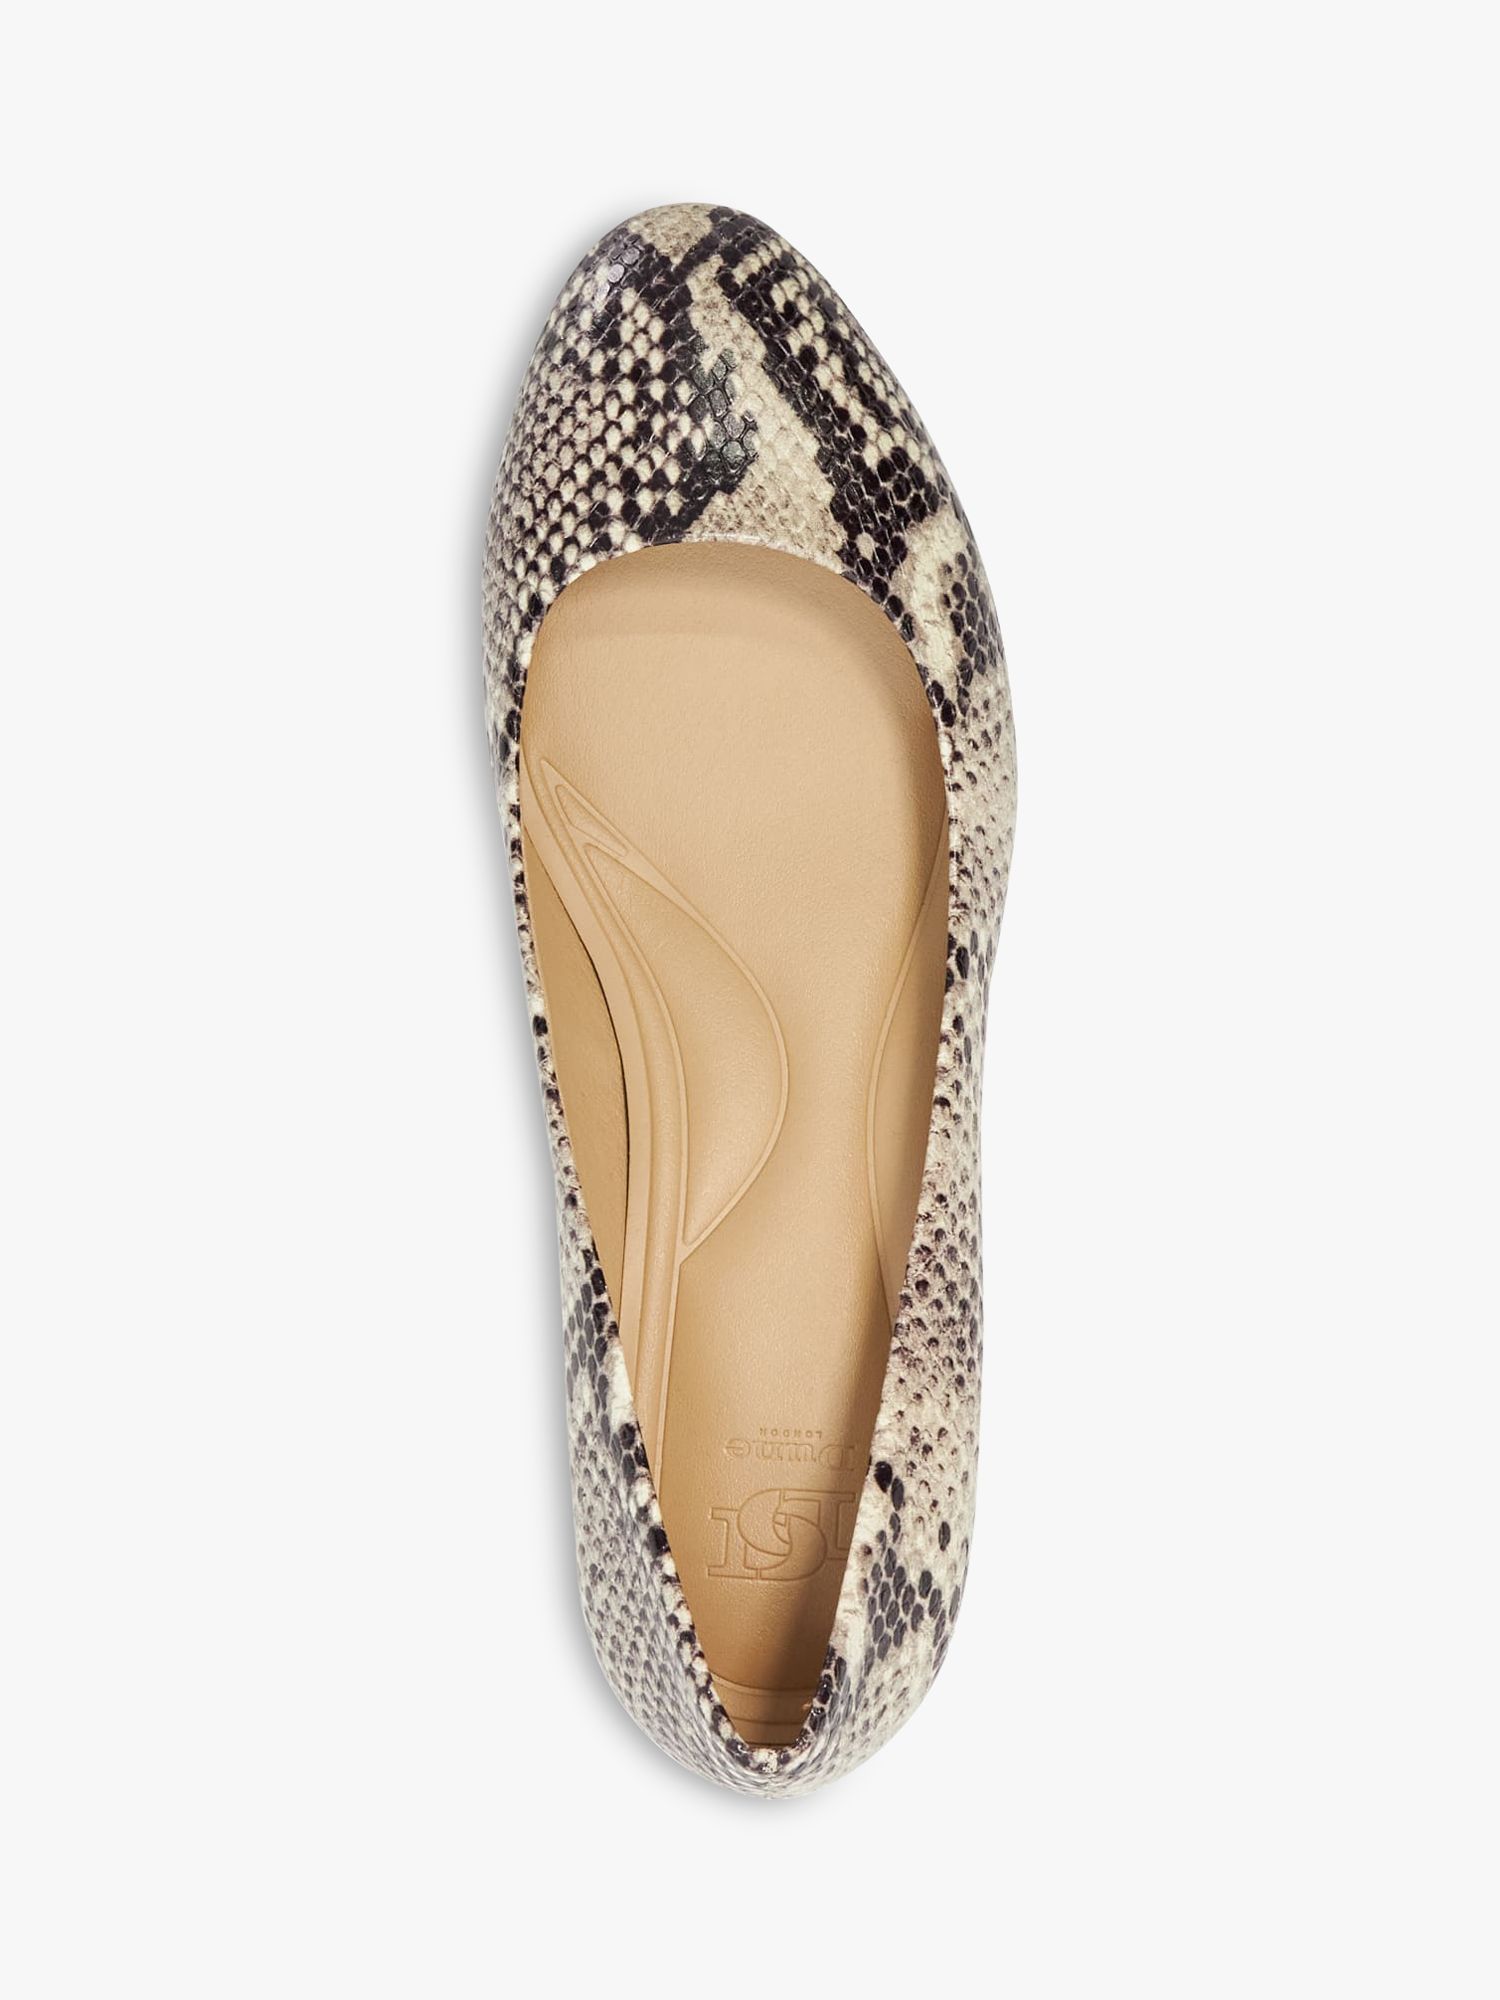 Dune Bracket Snake Effect Leather Low Block Heel Comfort Court Shoes, Cream/Multi, 3